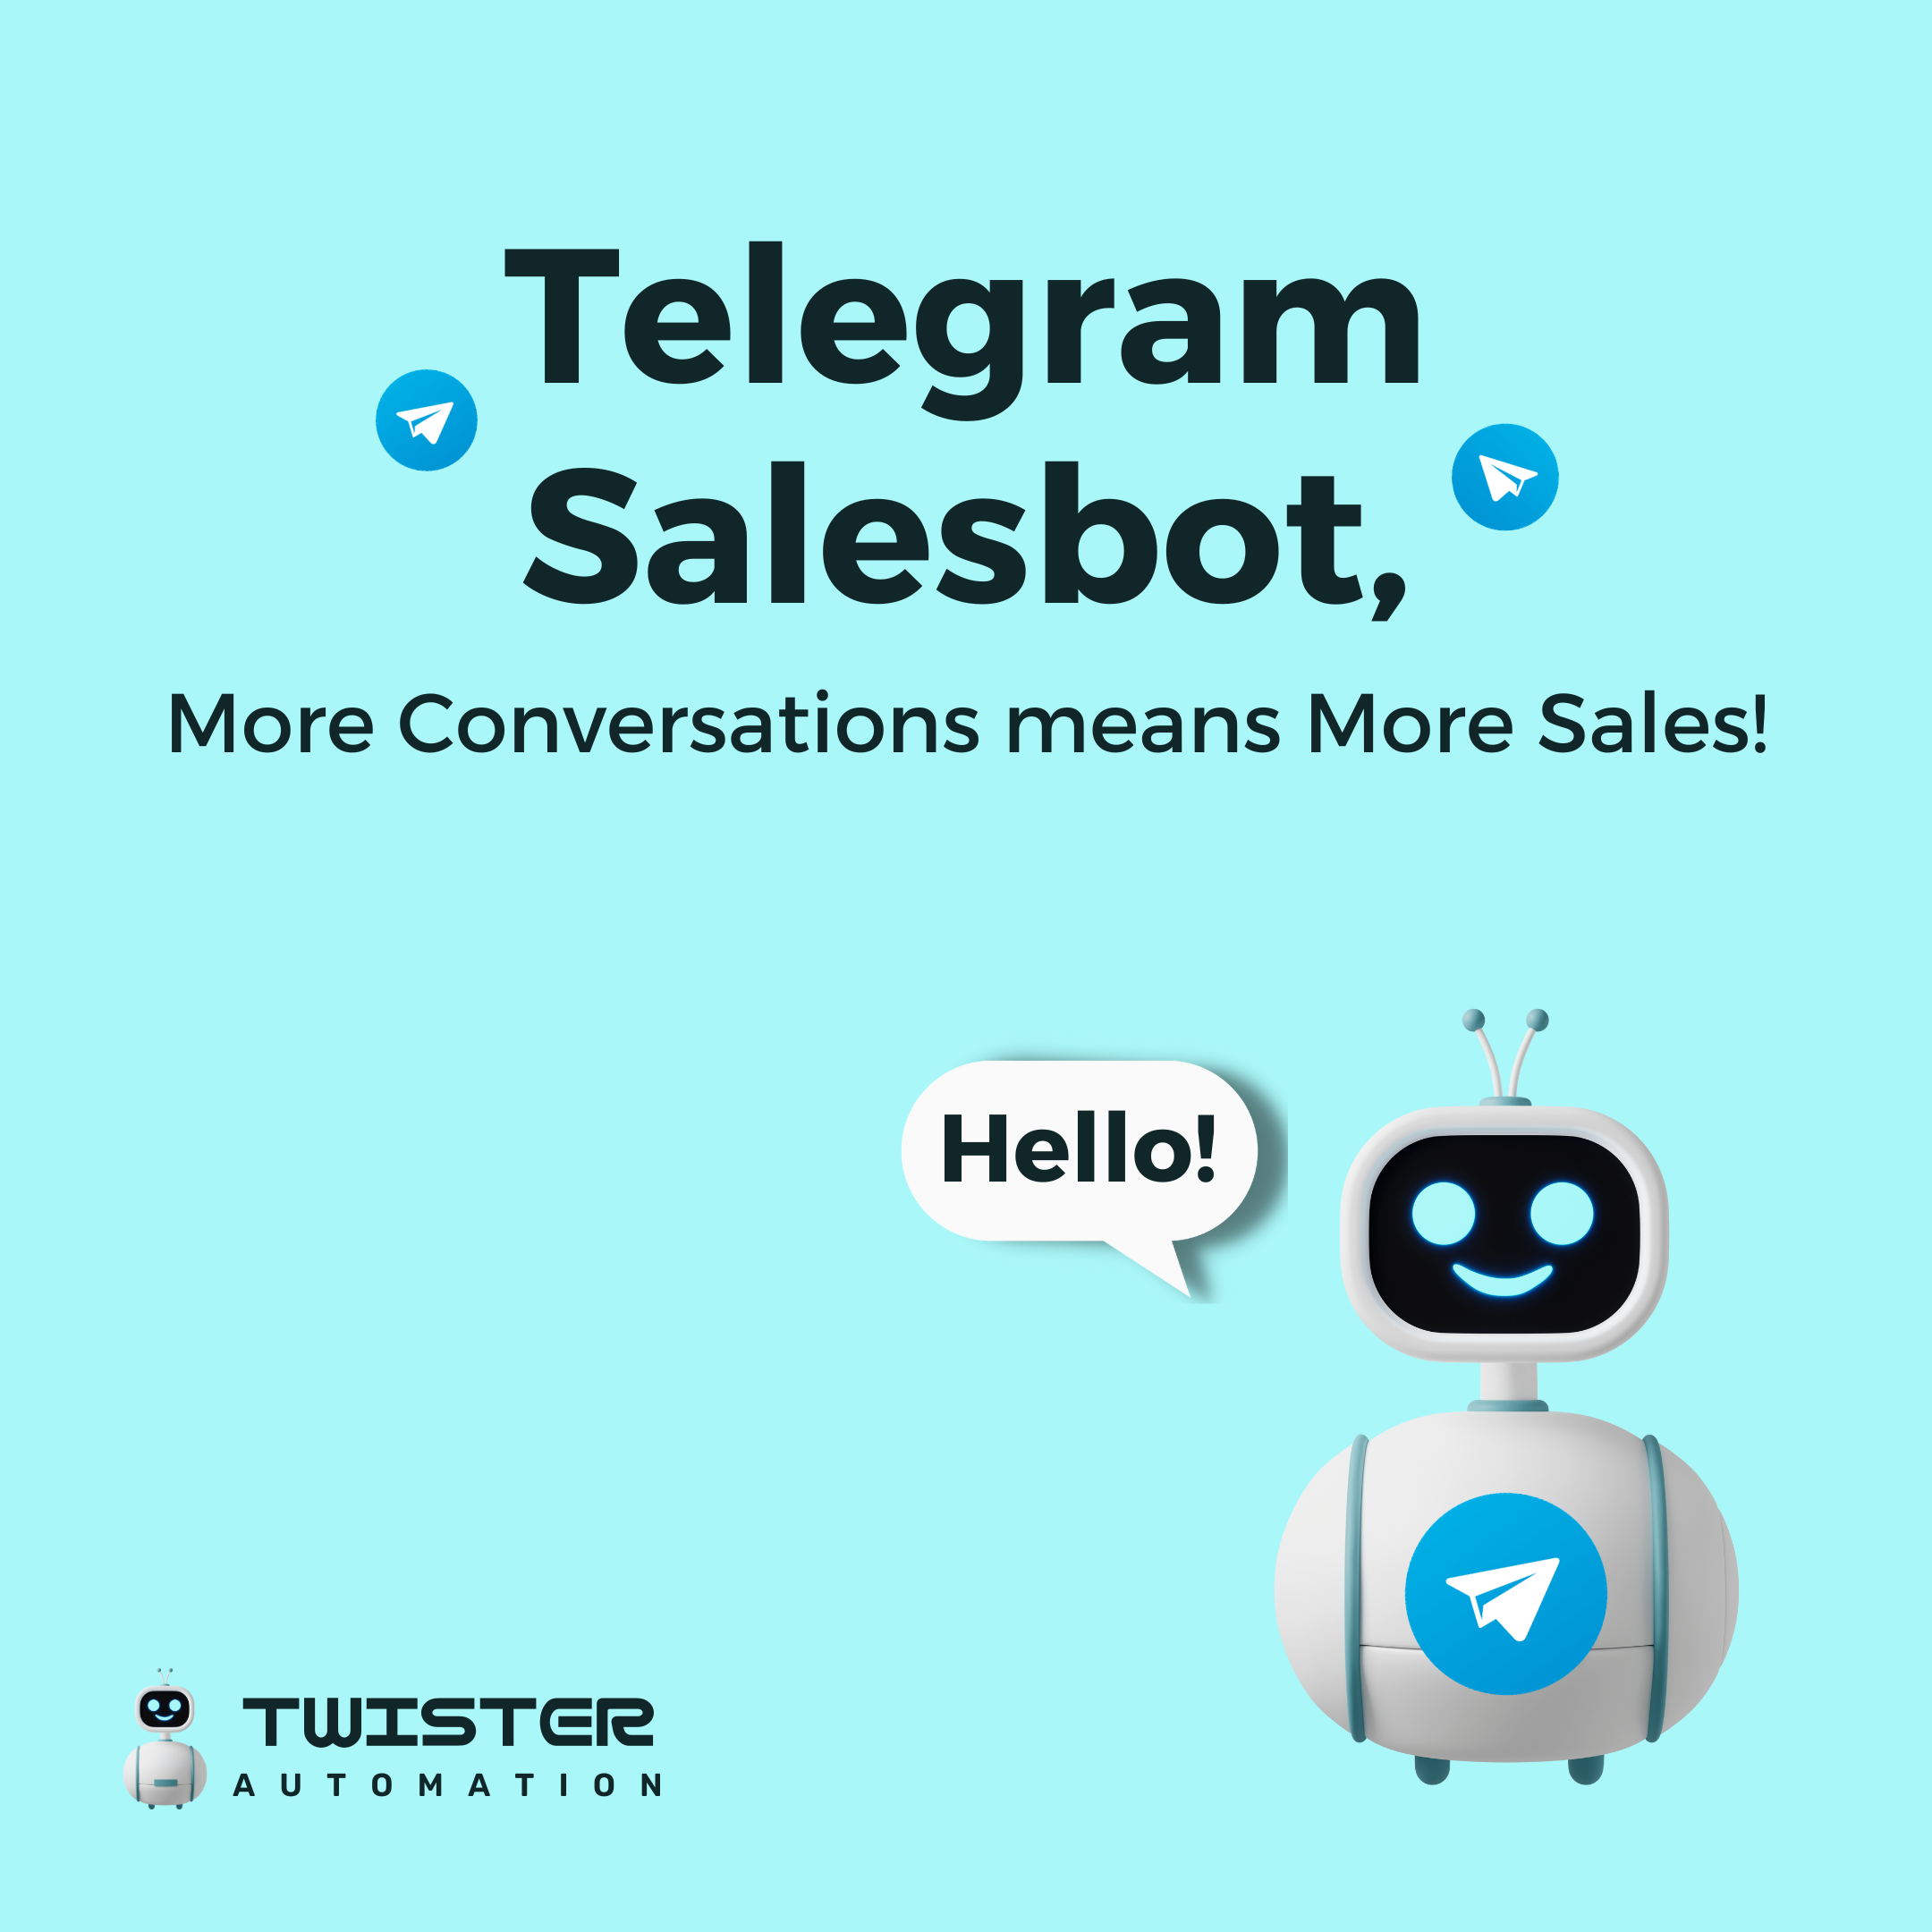 Telegram Salesbot